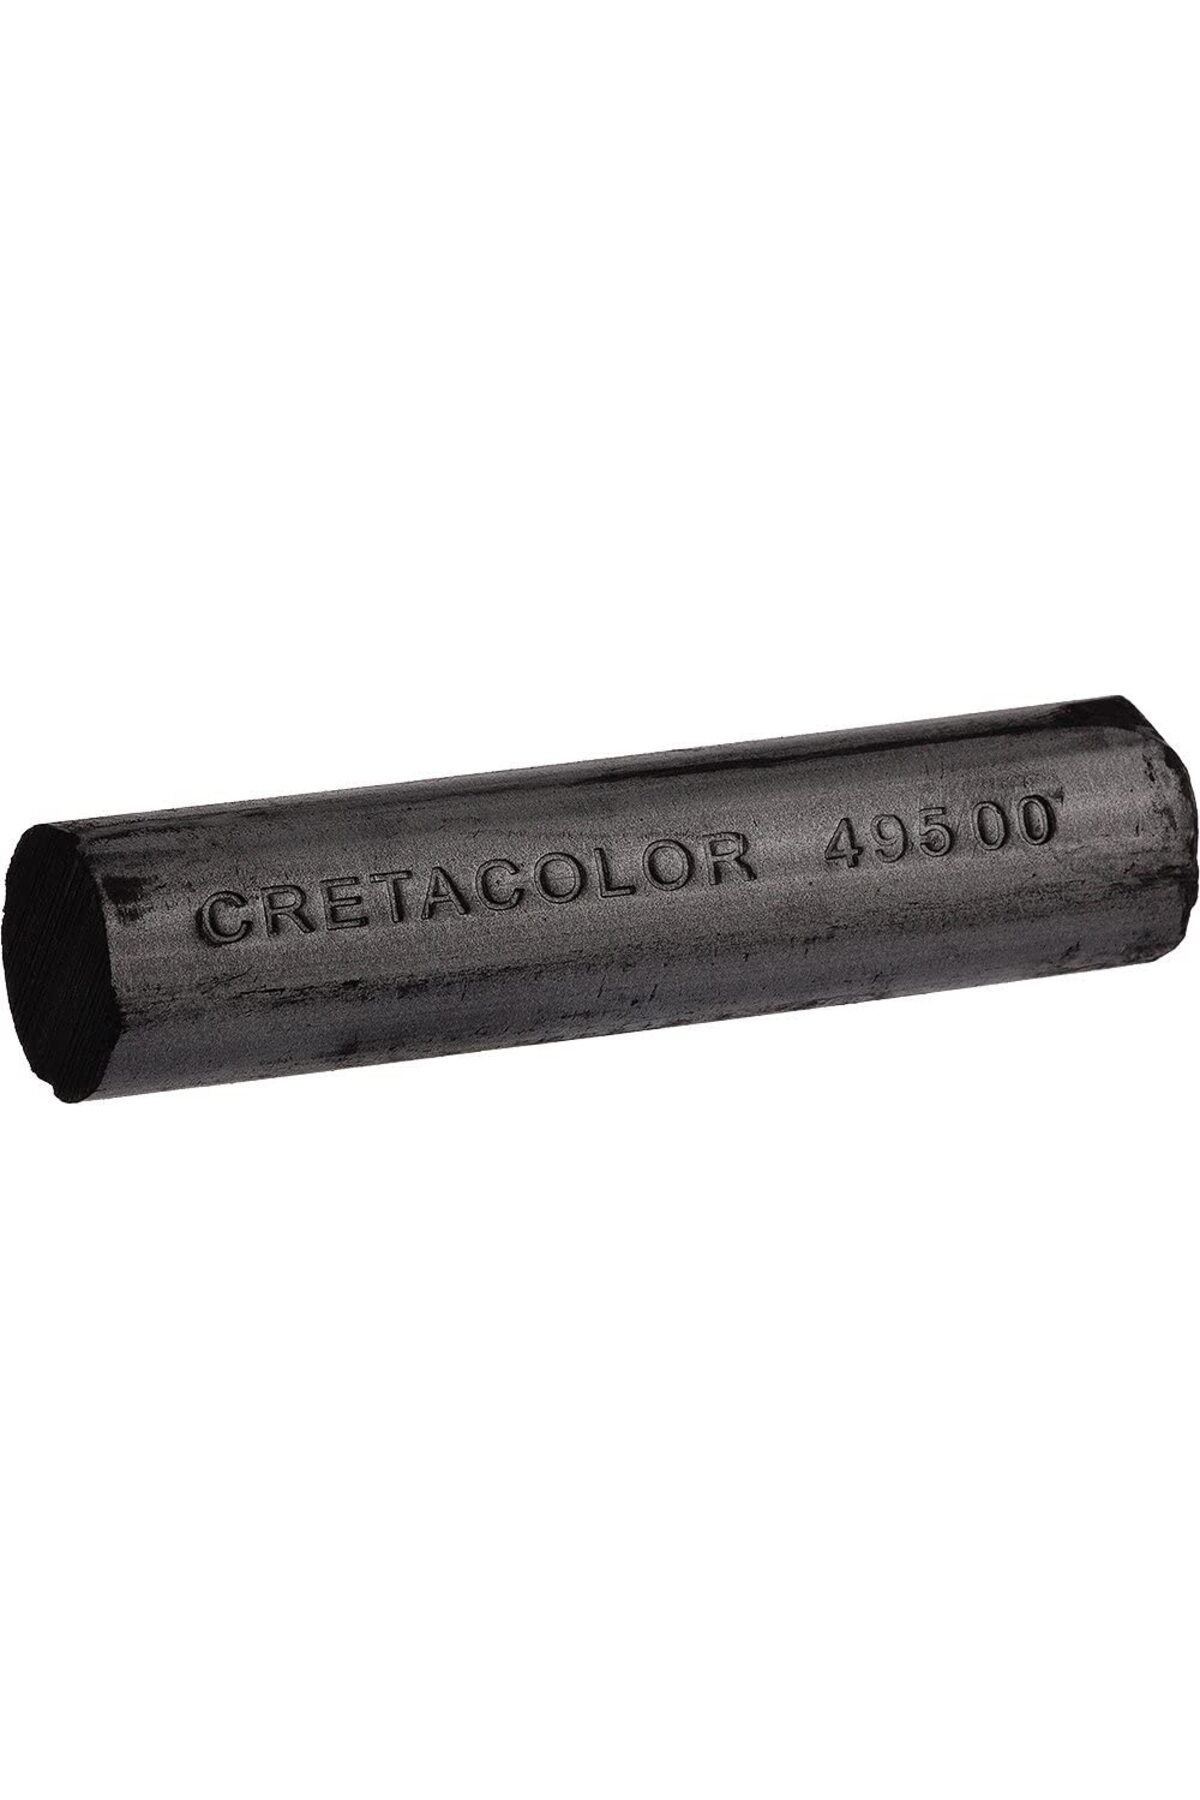 CretaColor Chunky Charcoal Kömür Çubuk / 49500